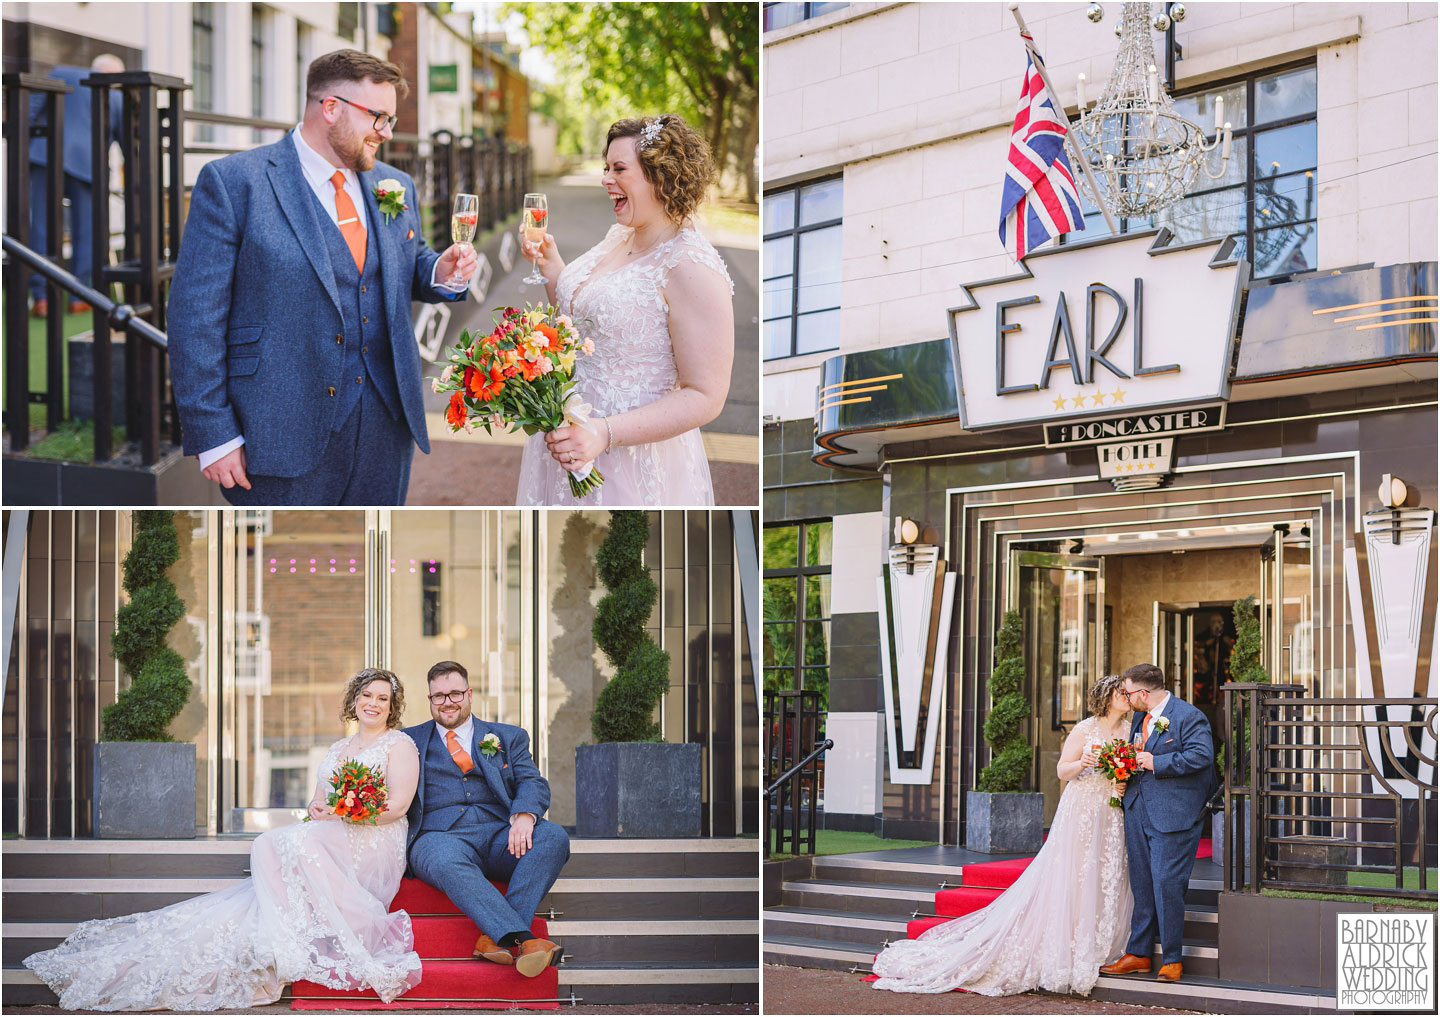 The Earl Doncaster Wedding Photos, The Earl Doncaster, The Earl of Doncaster Wedding, The Earl of Doncaster Wedding Photos, Earl of Doncaster Wedding Photographer,